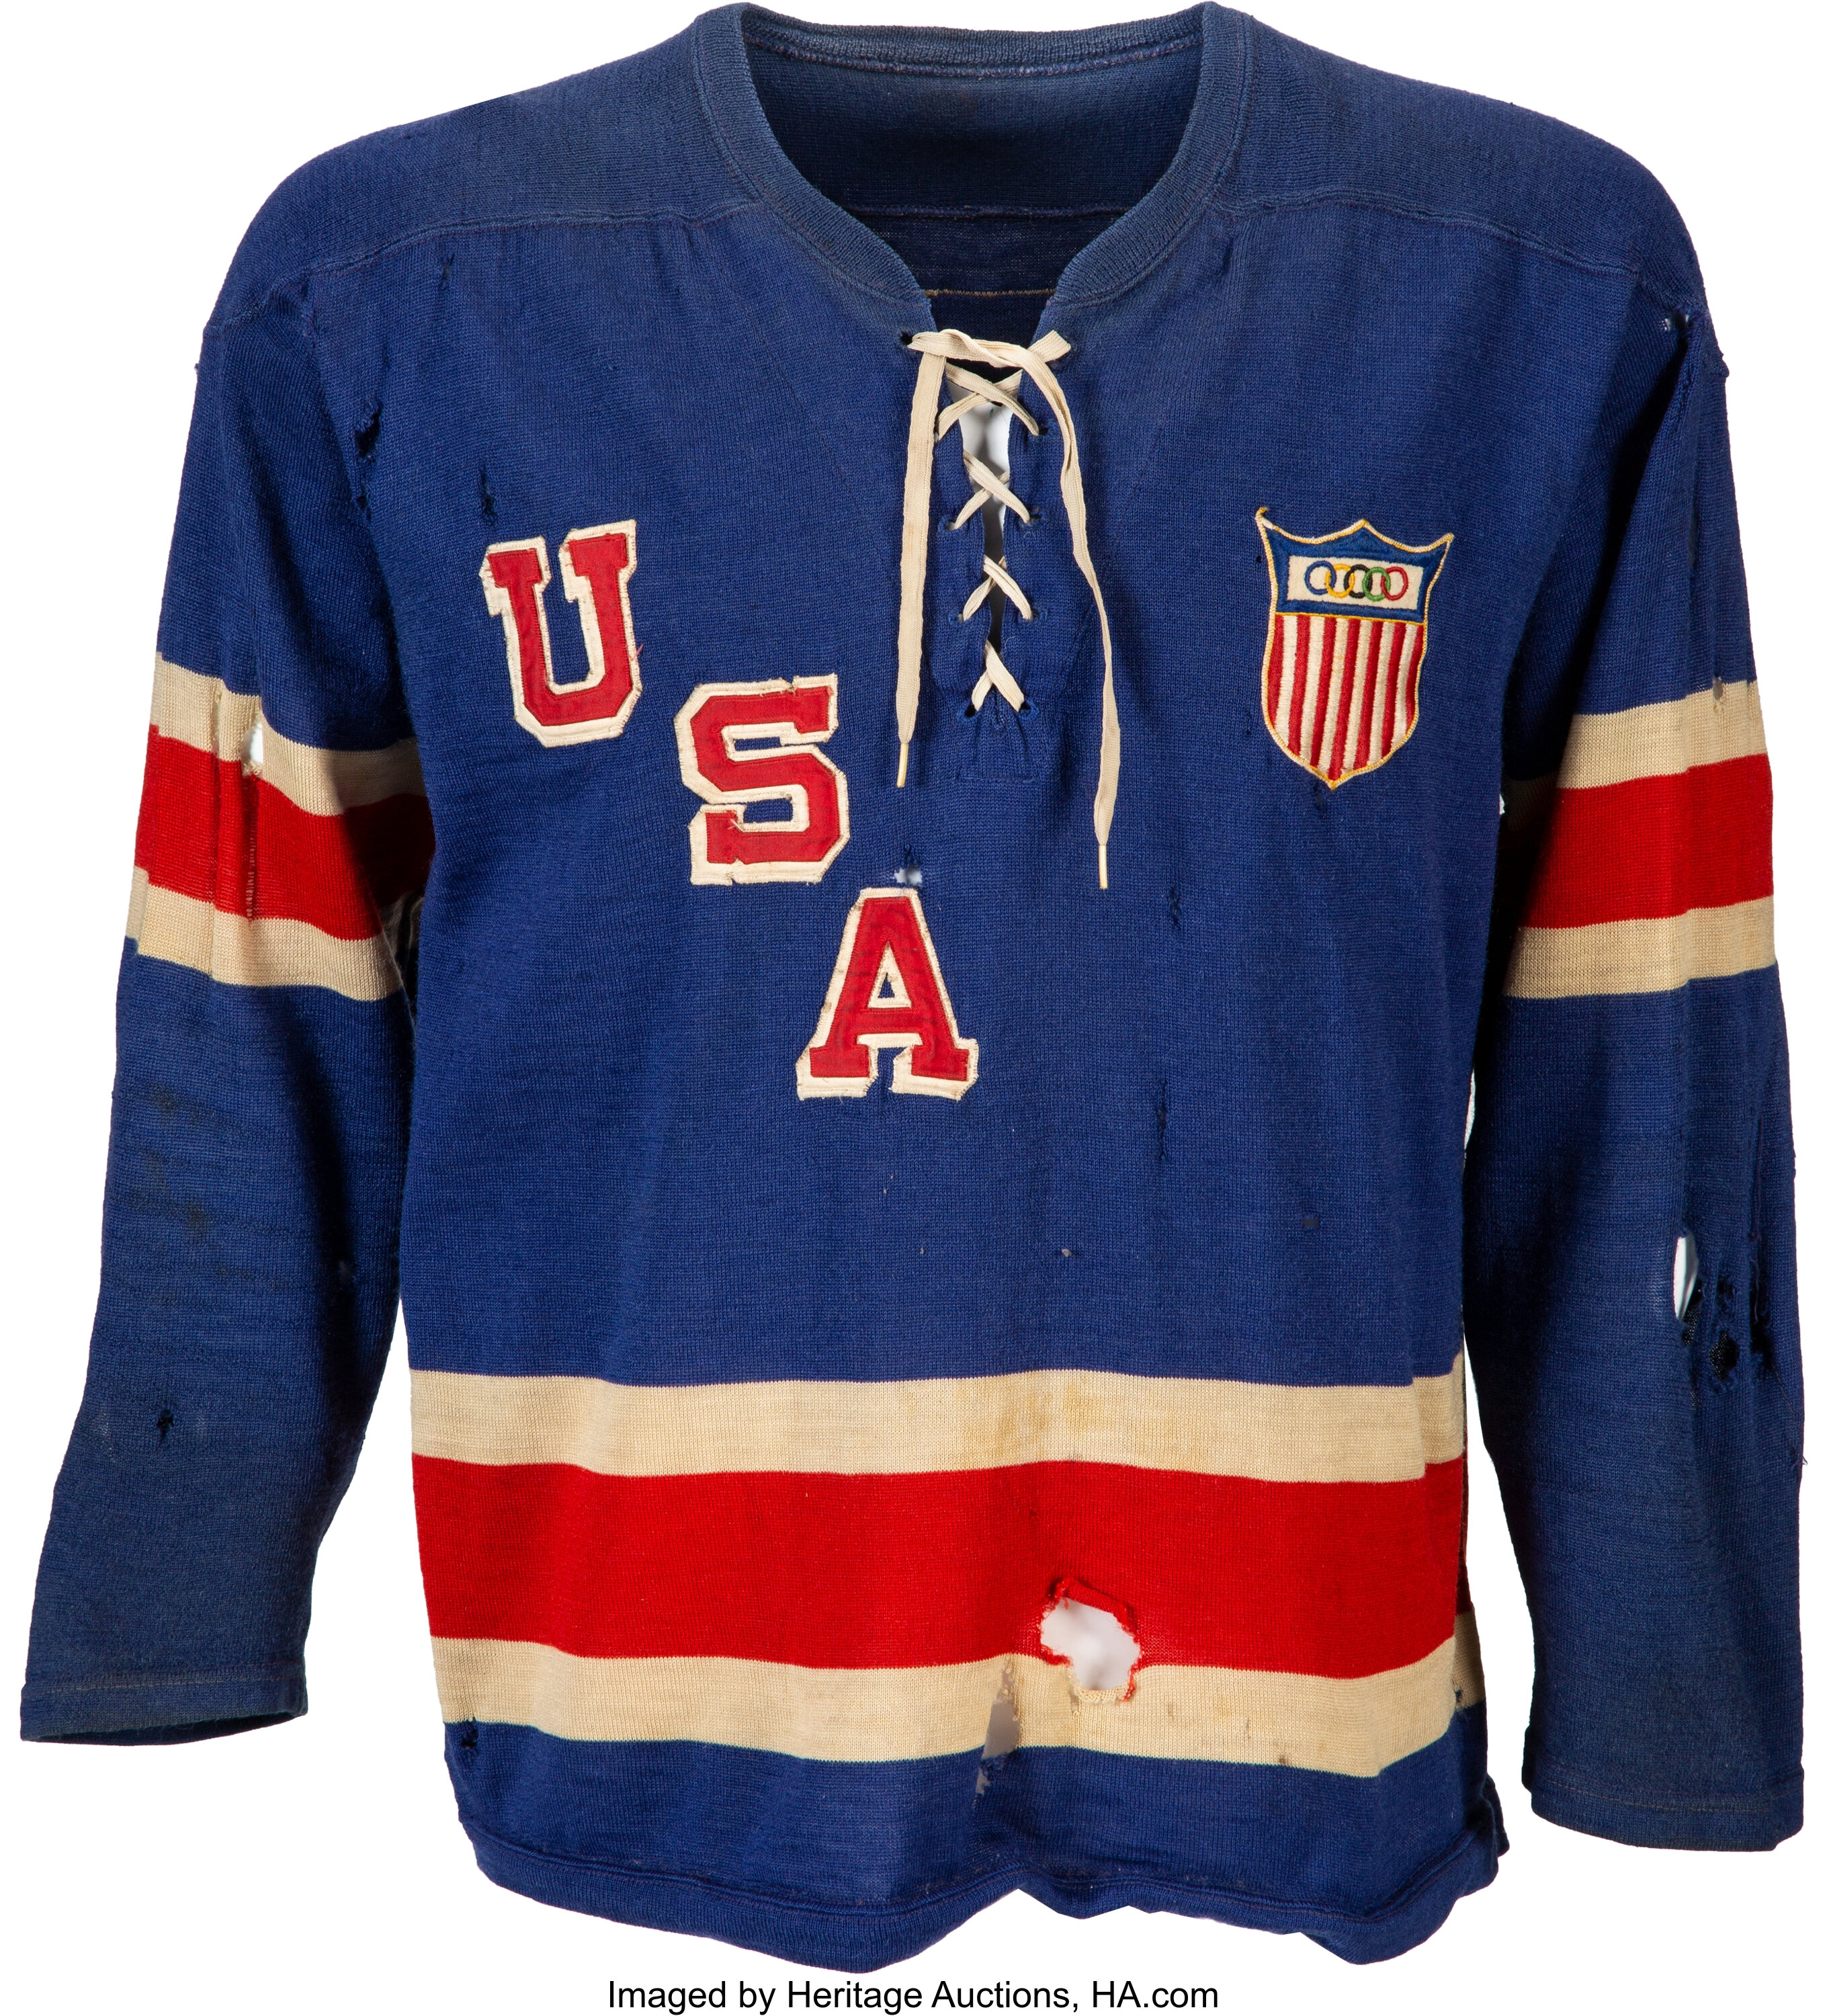 USA 1960 Squaw Valley vintage hockey jersey